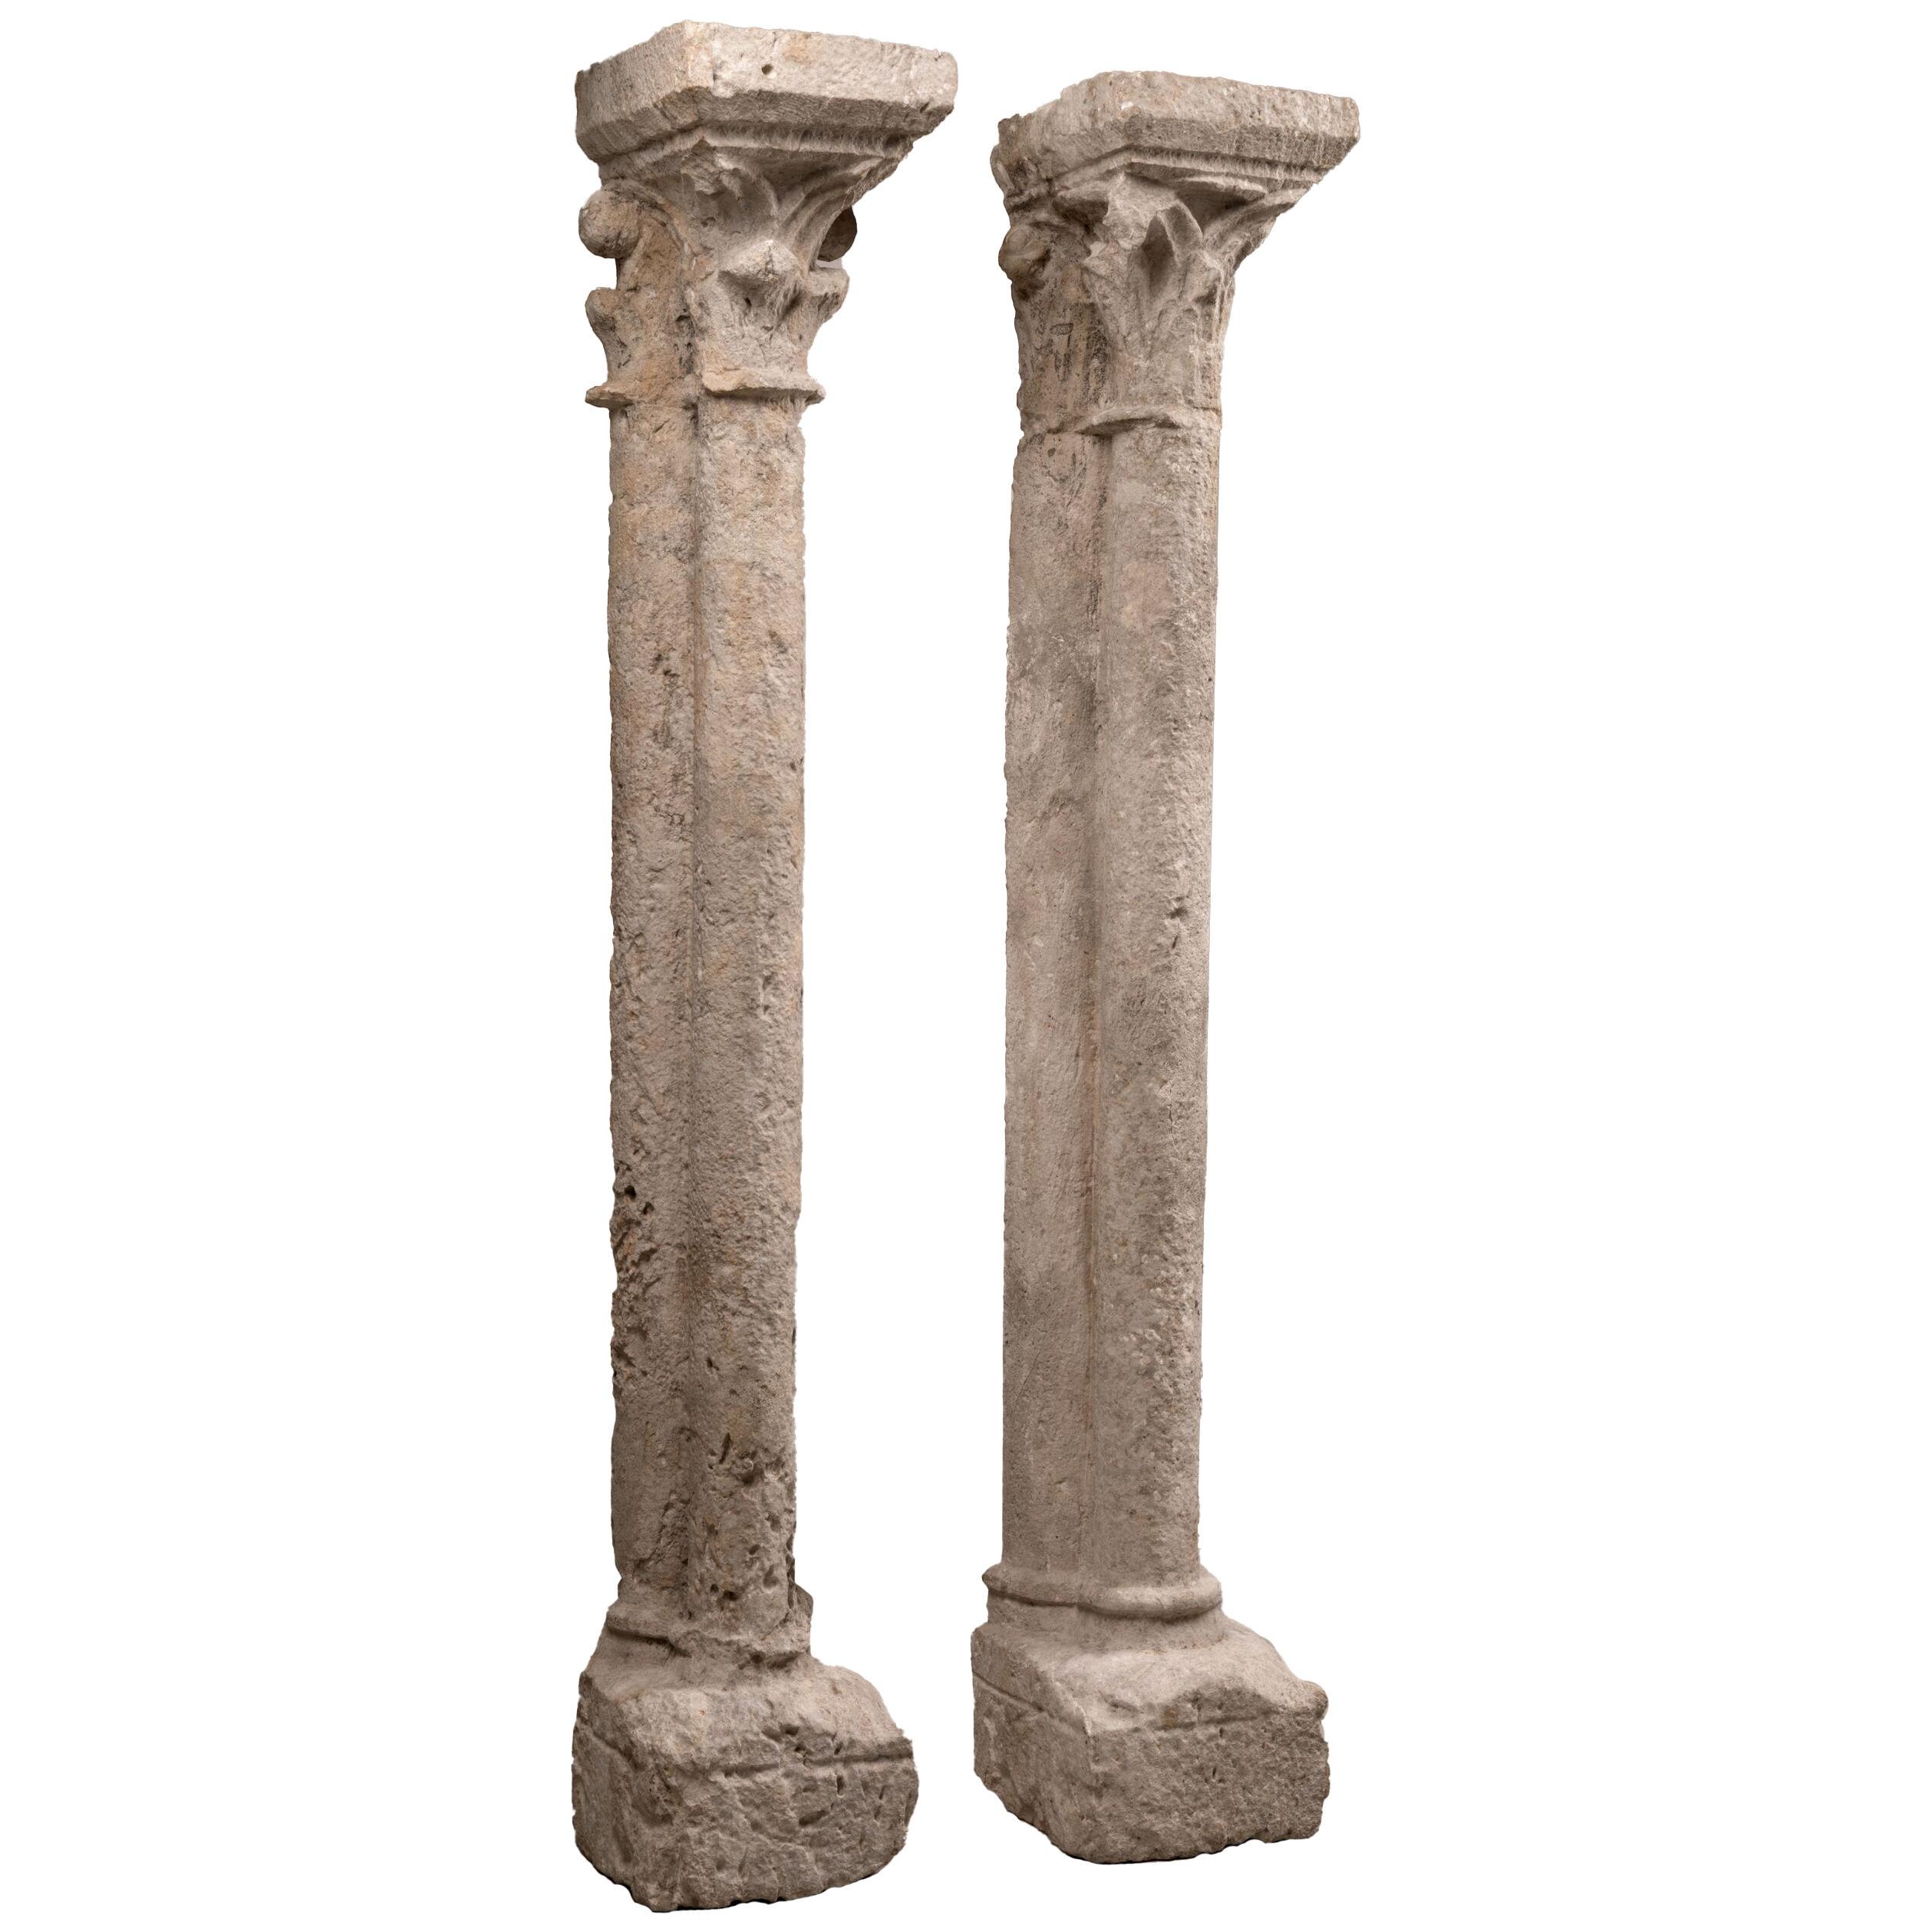 pair of Stone gothic columns - France - 13th century